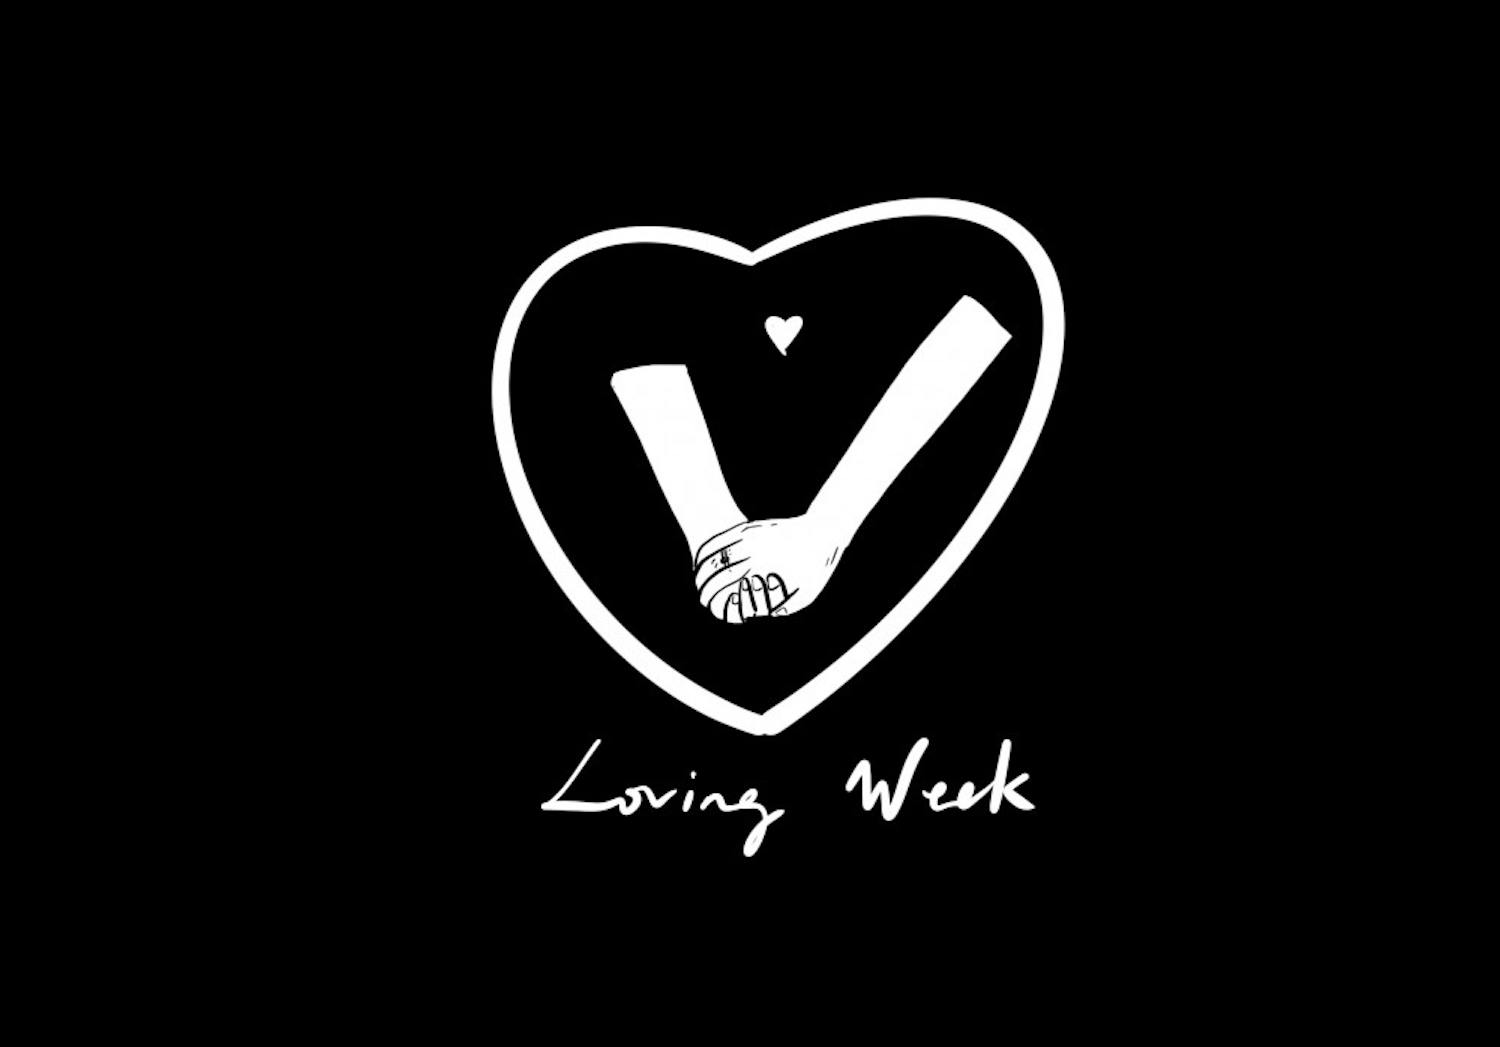 SummerZhang-Lovingweek